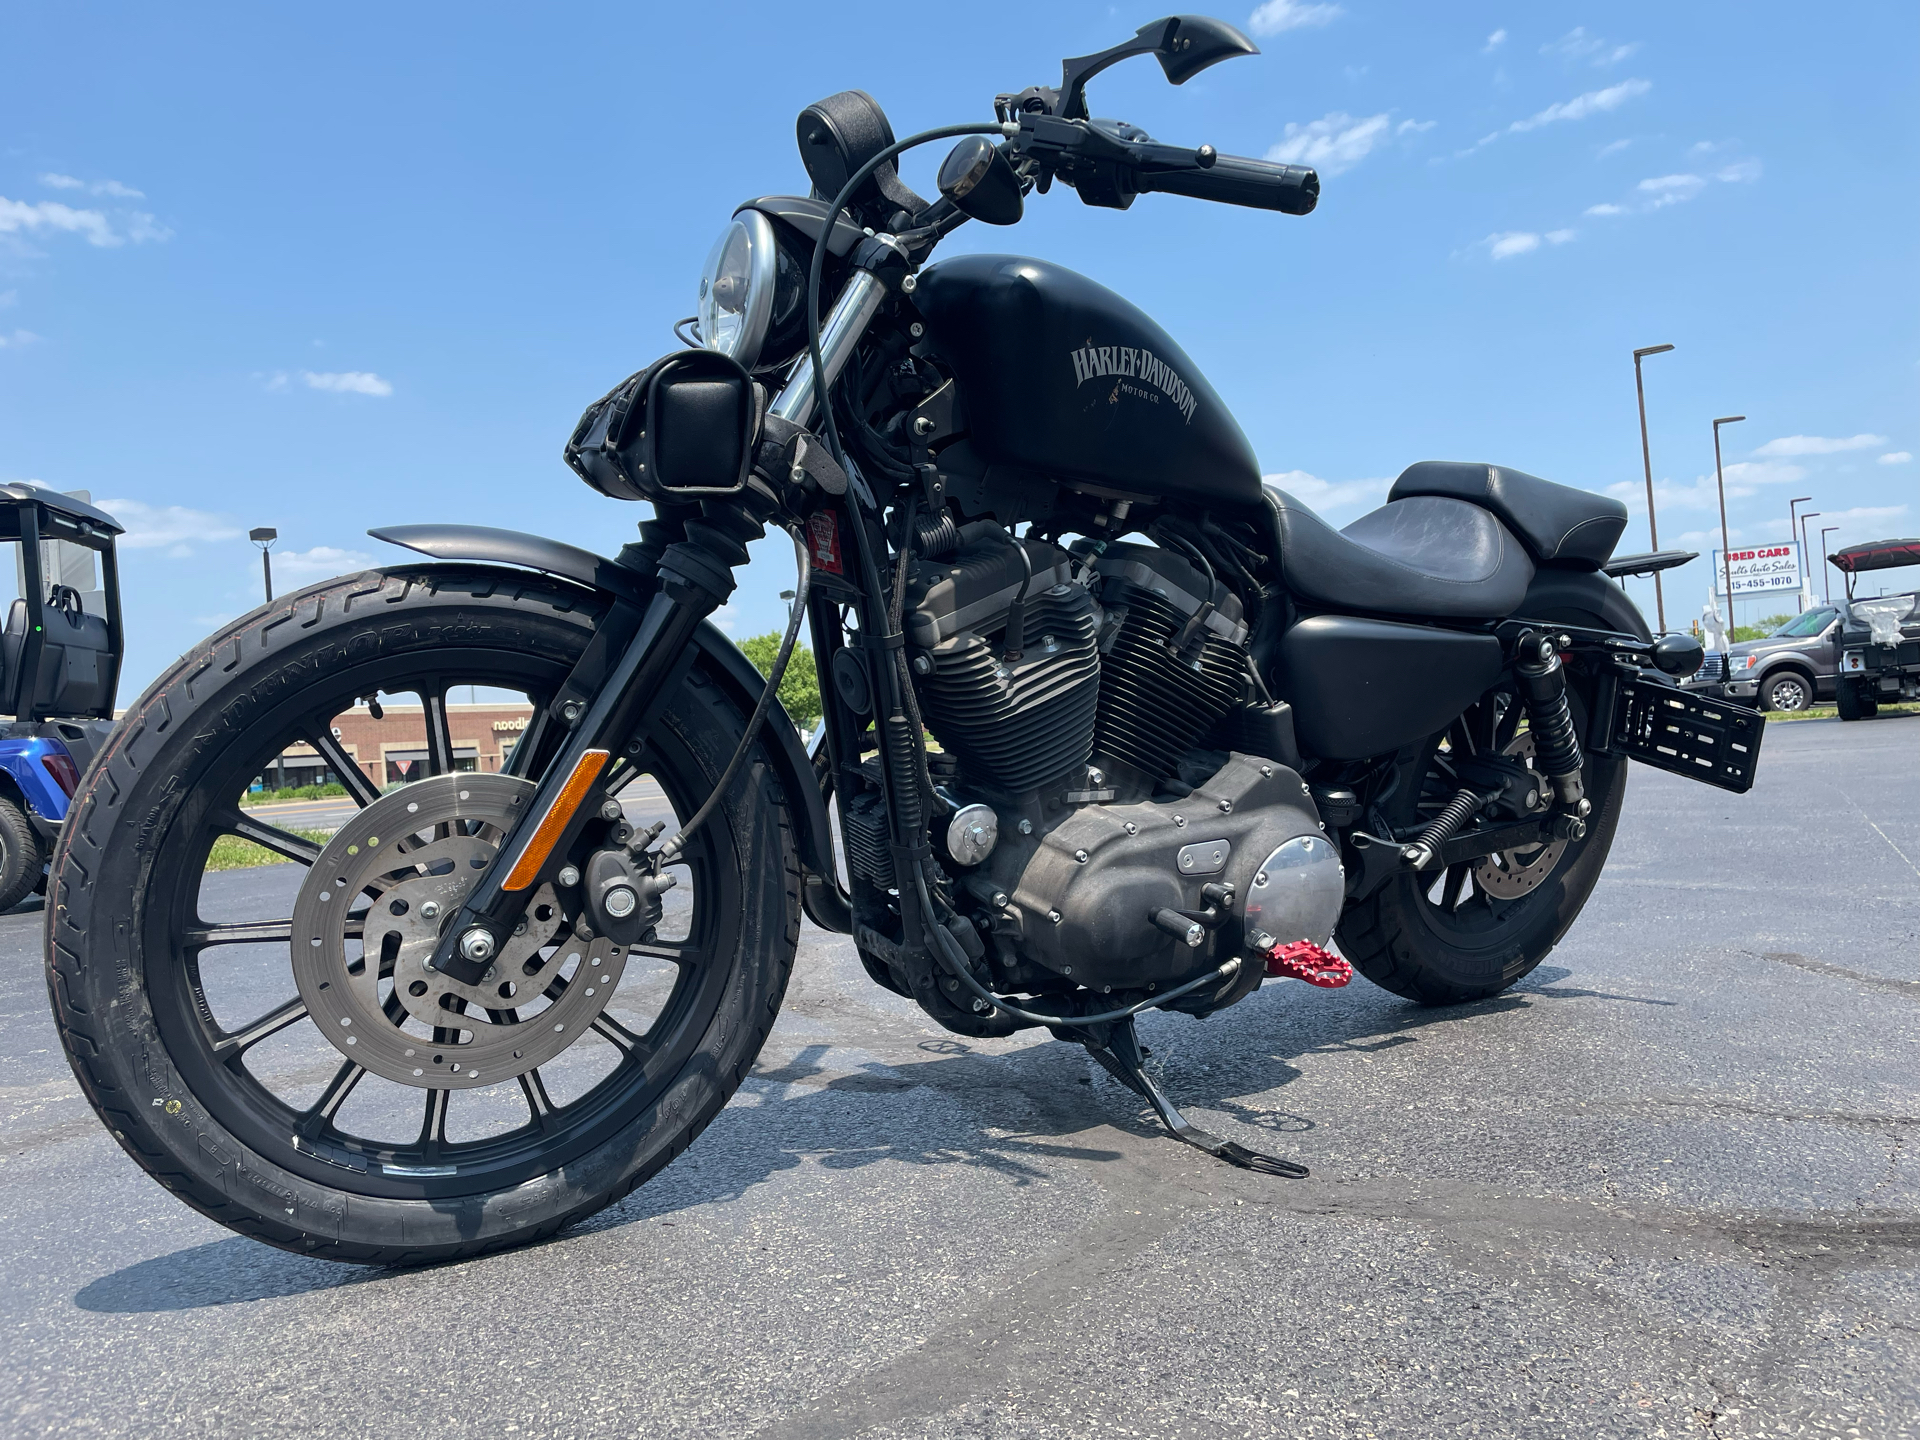 2012 Harley-Davidson Sportster® Iron 883™ in Crystal Lake, Illinois - Photo 4